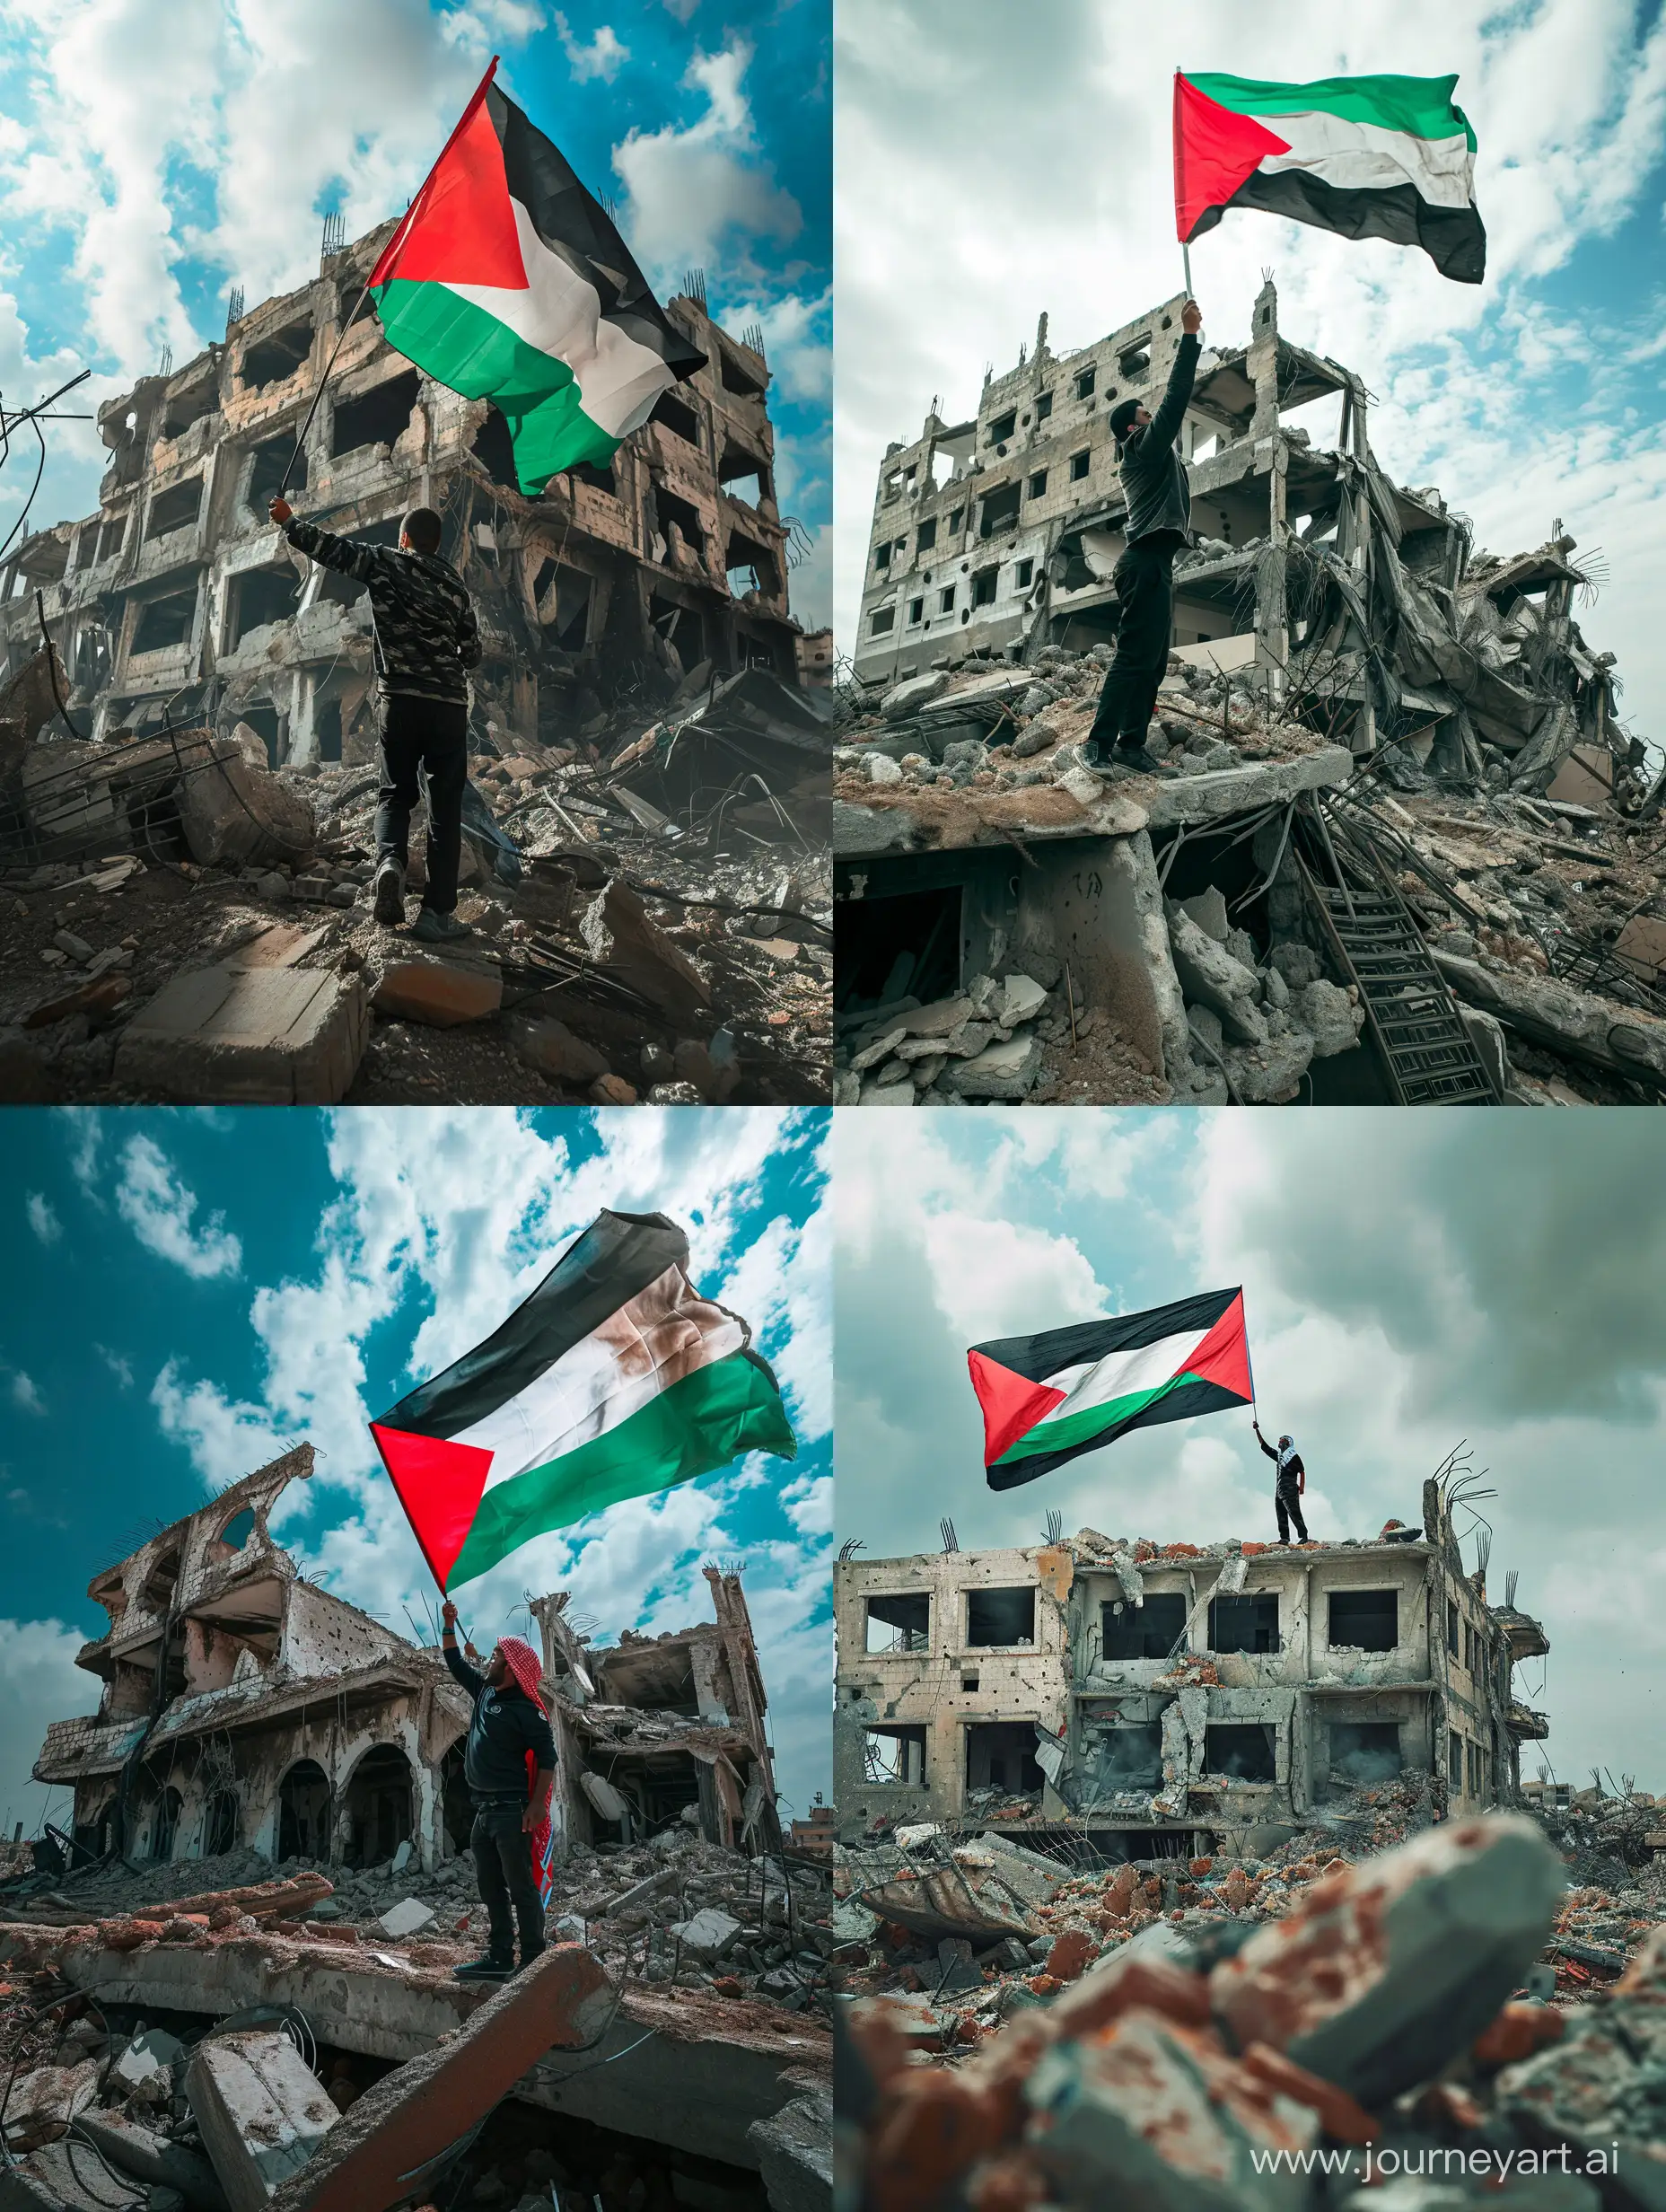 ultra realistic,aan hj arshad mengibarkan bendera palestine di depan runtuhan bangunan yang telah dibom tentera., canon eos-id x mark iii dslr --v 6.0